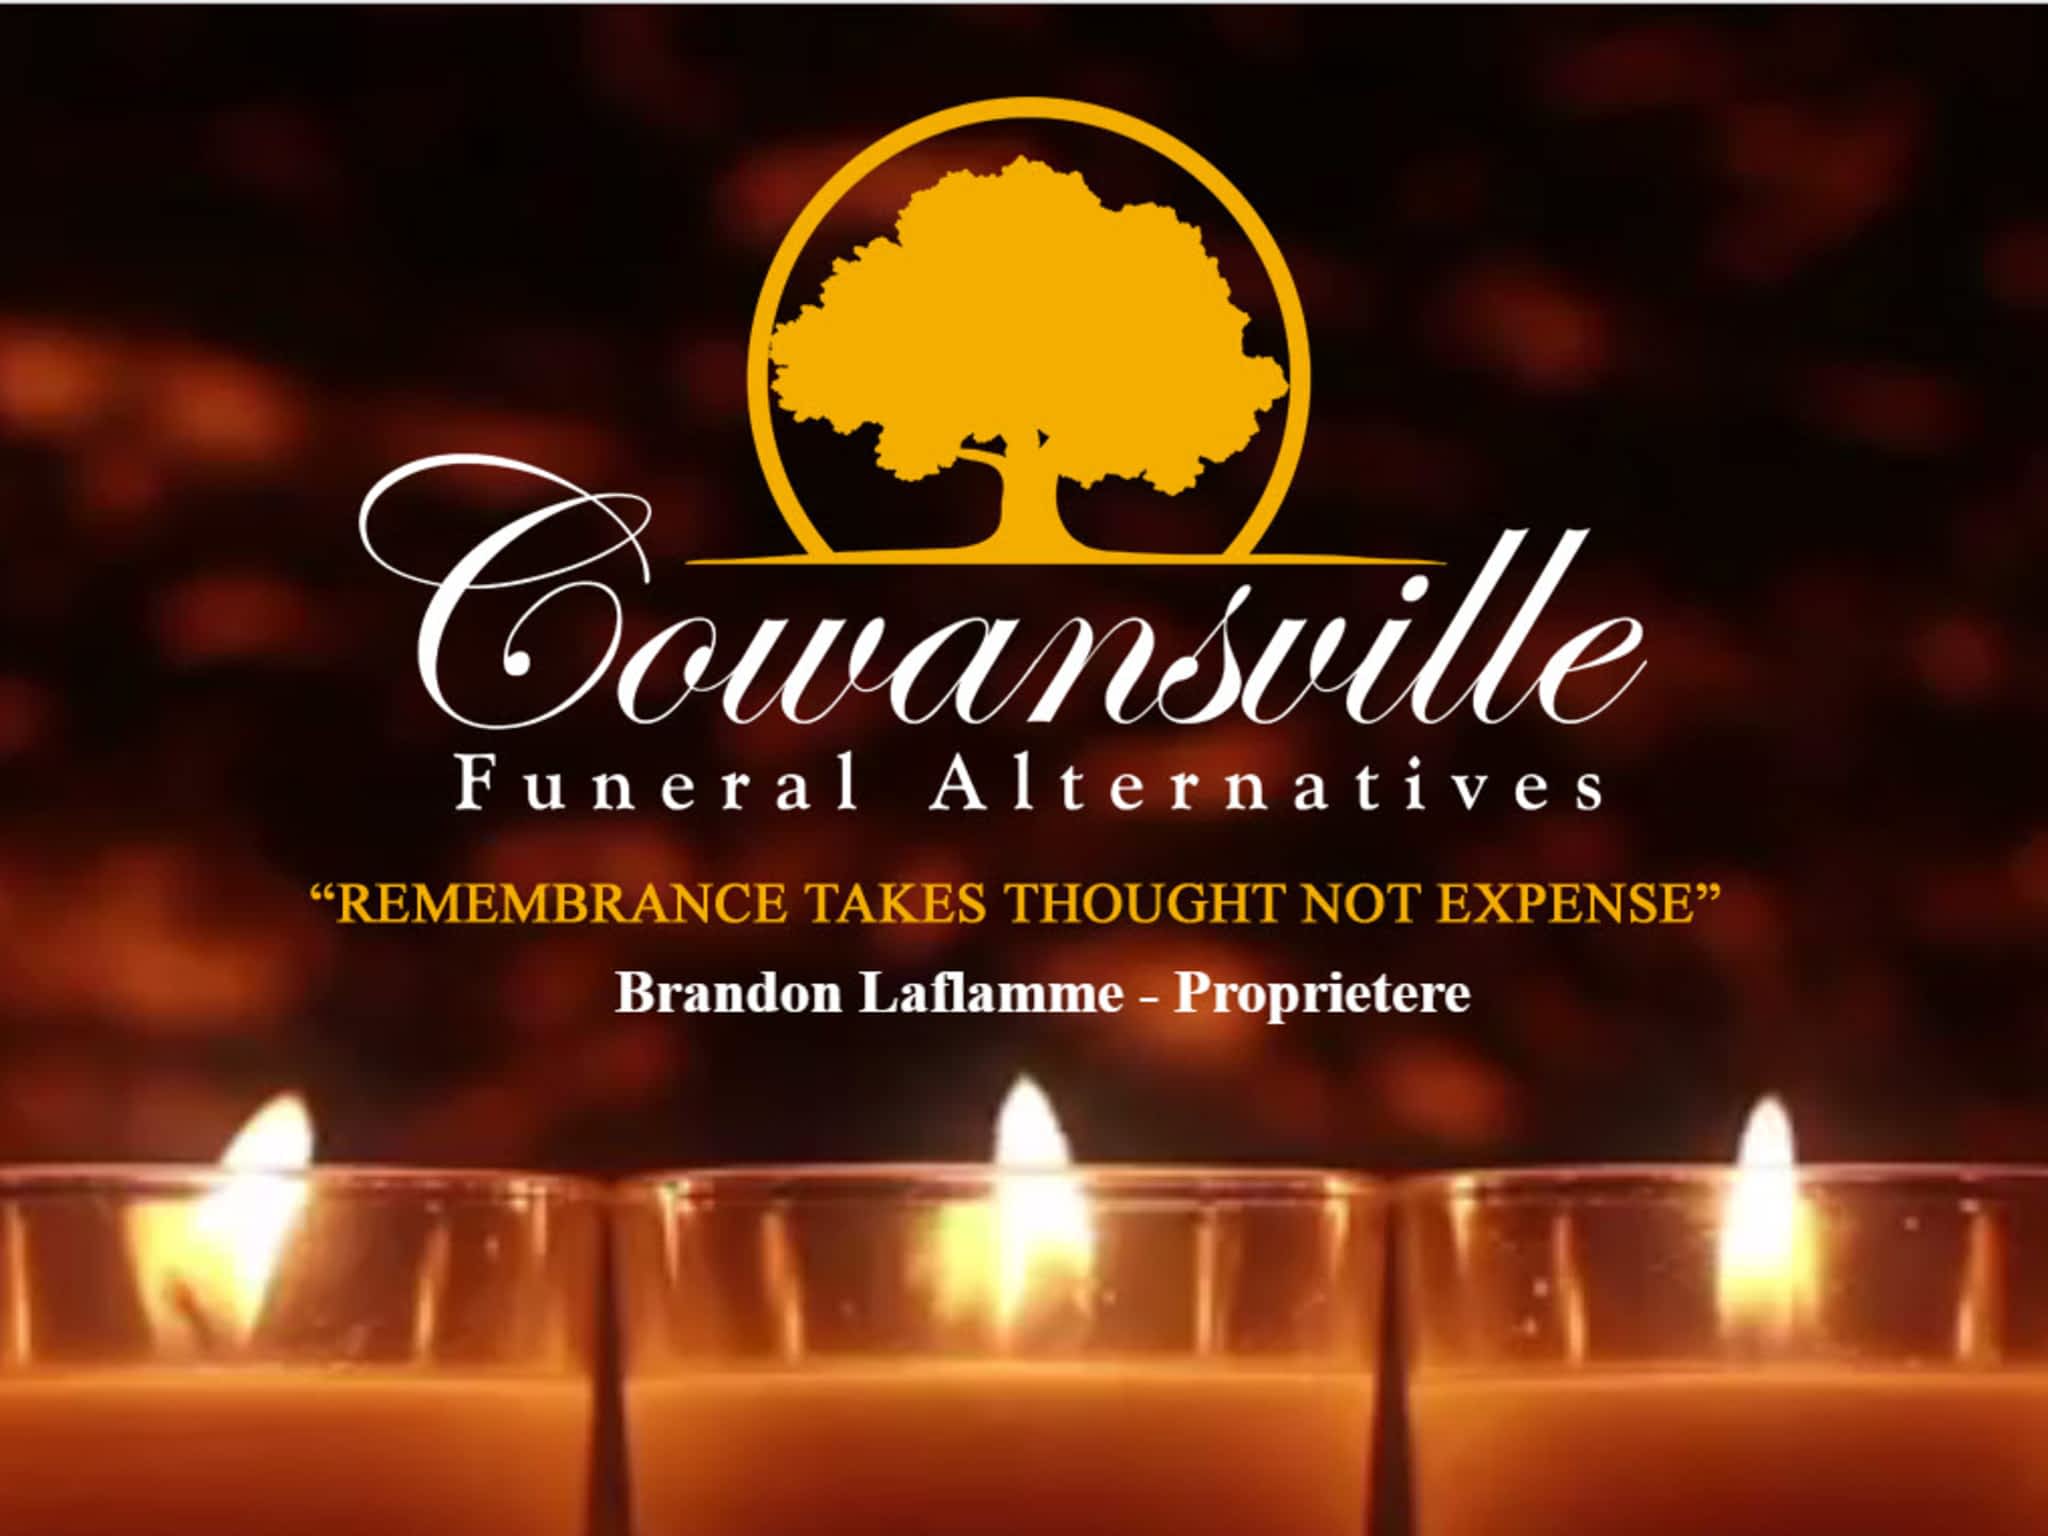 photo Cowansville Funeral Alternative